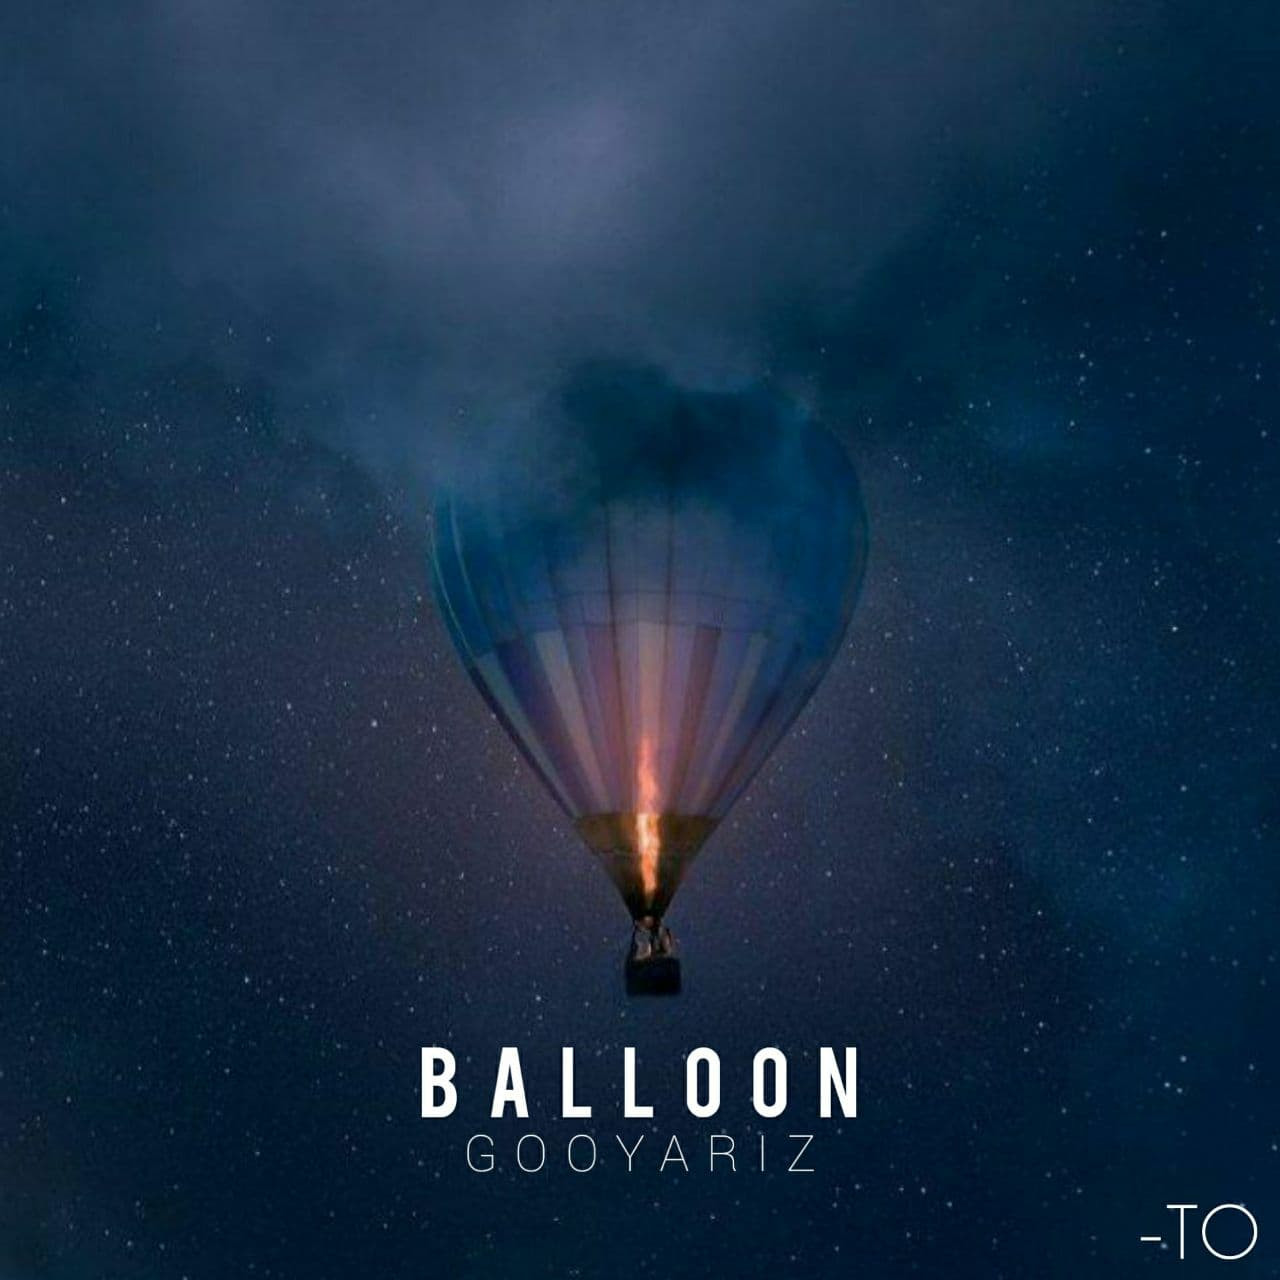 Gooyariz - Balloon Album